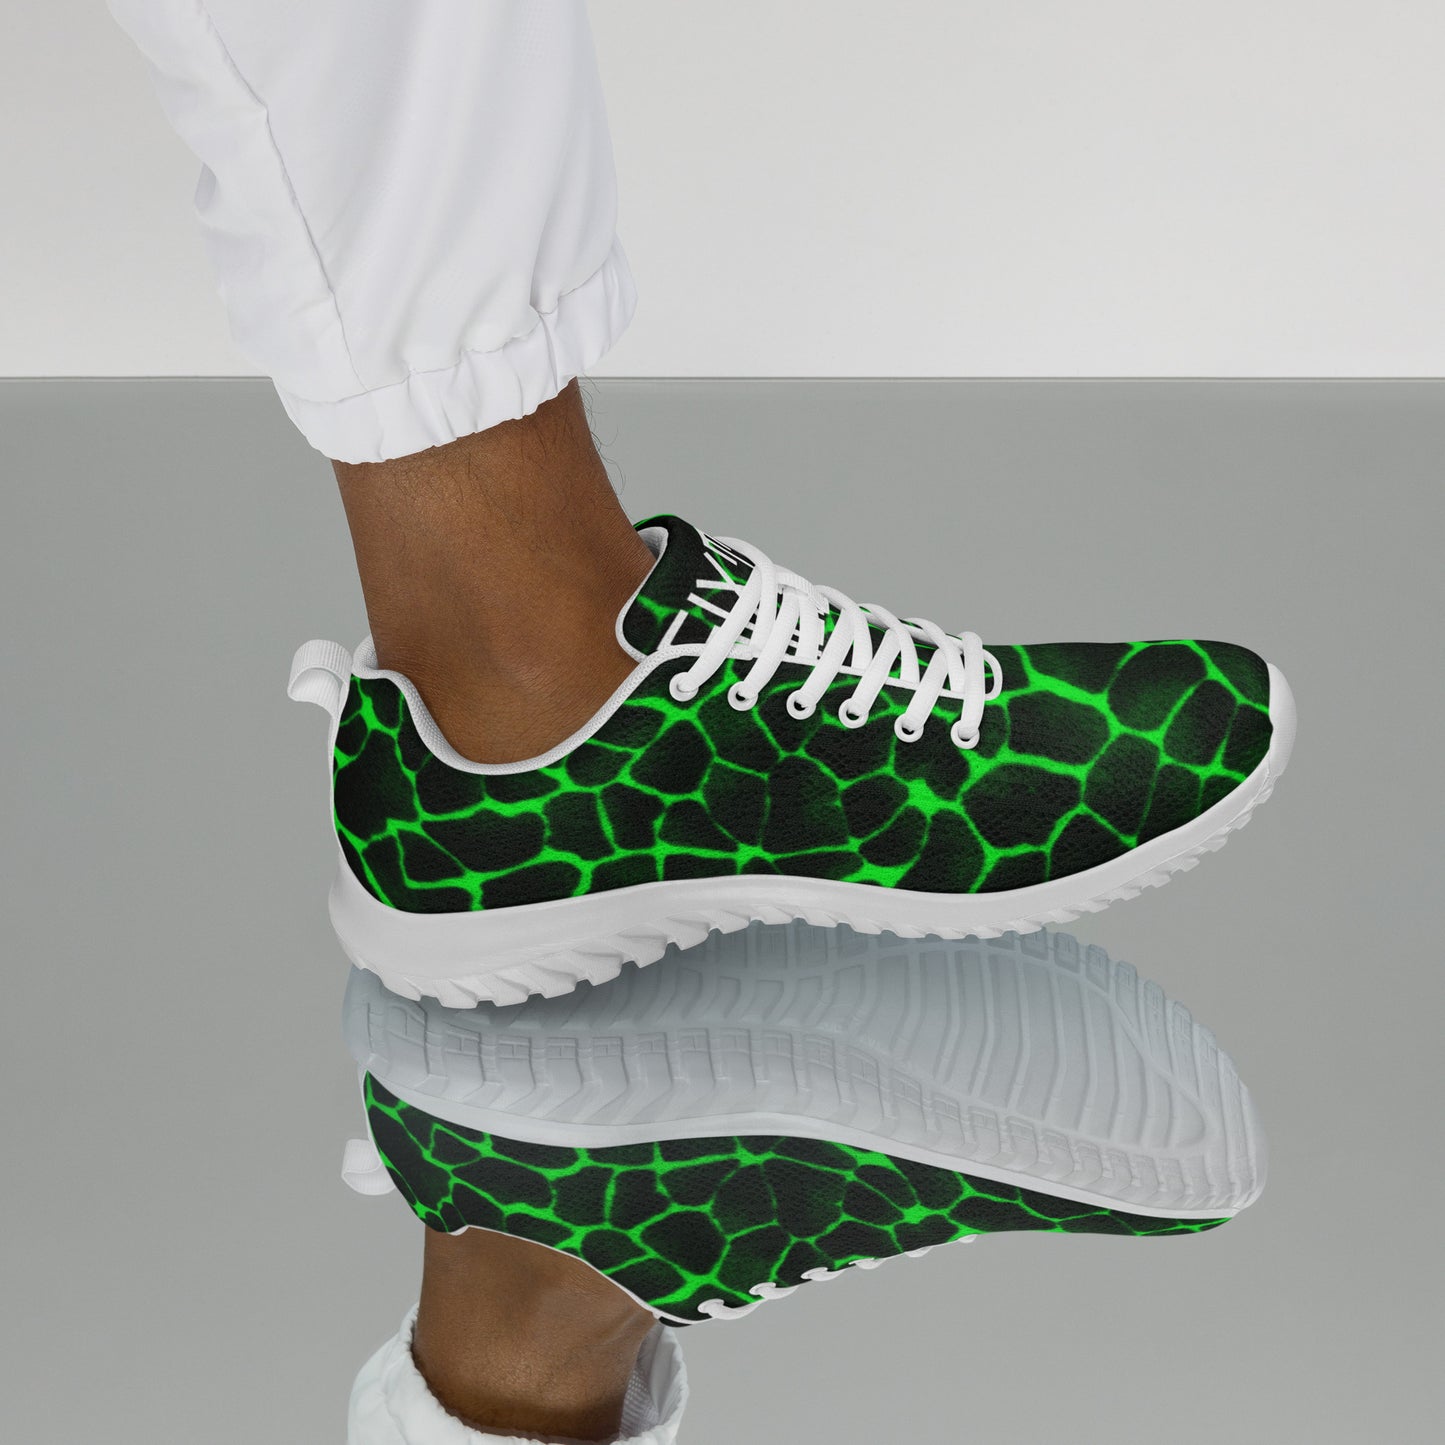 Sixty Eight 93 Logo White Boa Lime Green Men’s Athletic Shoes